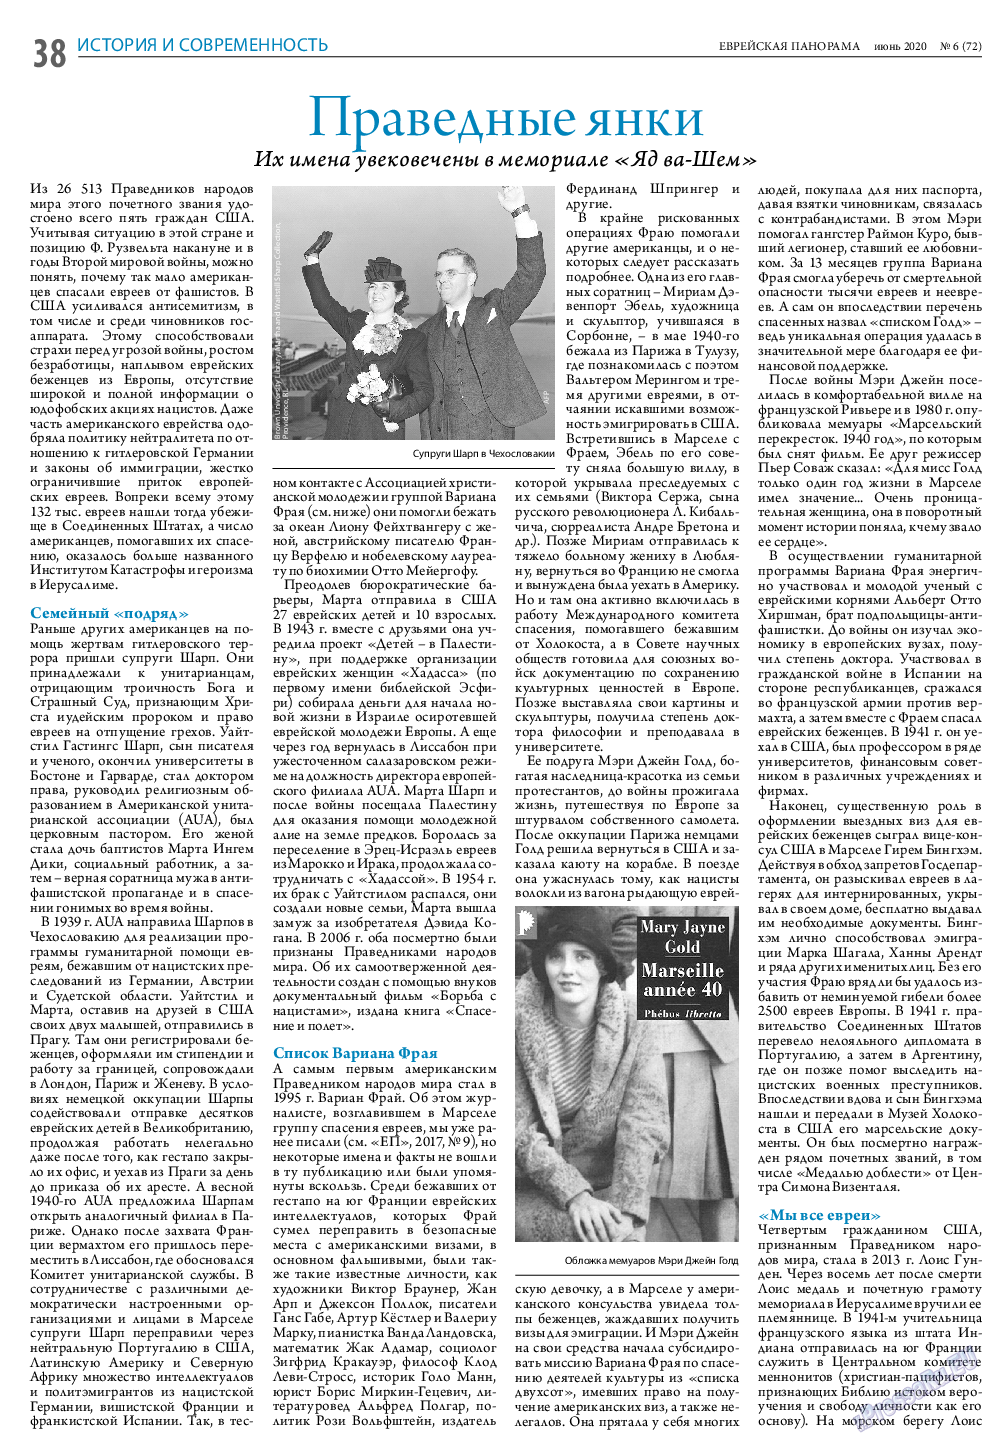 Еврейская панорама, газета. 2020 №6 стр.38